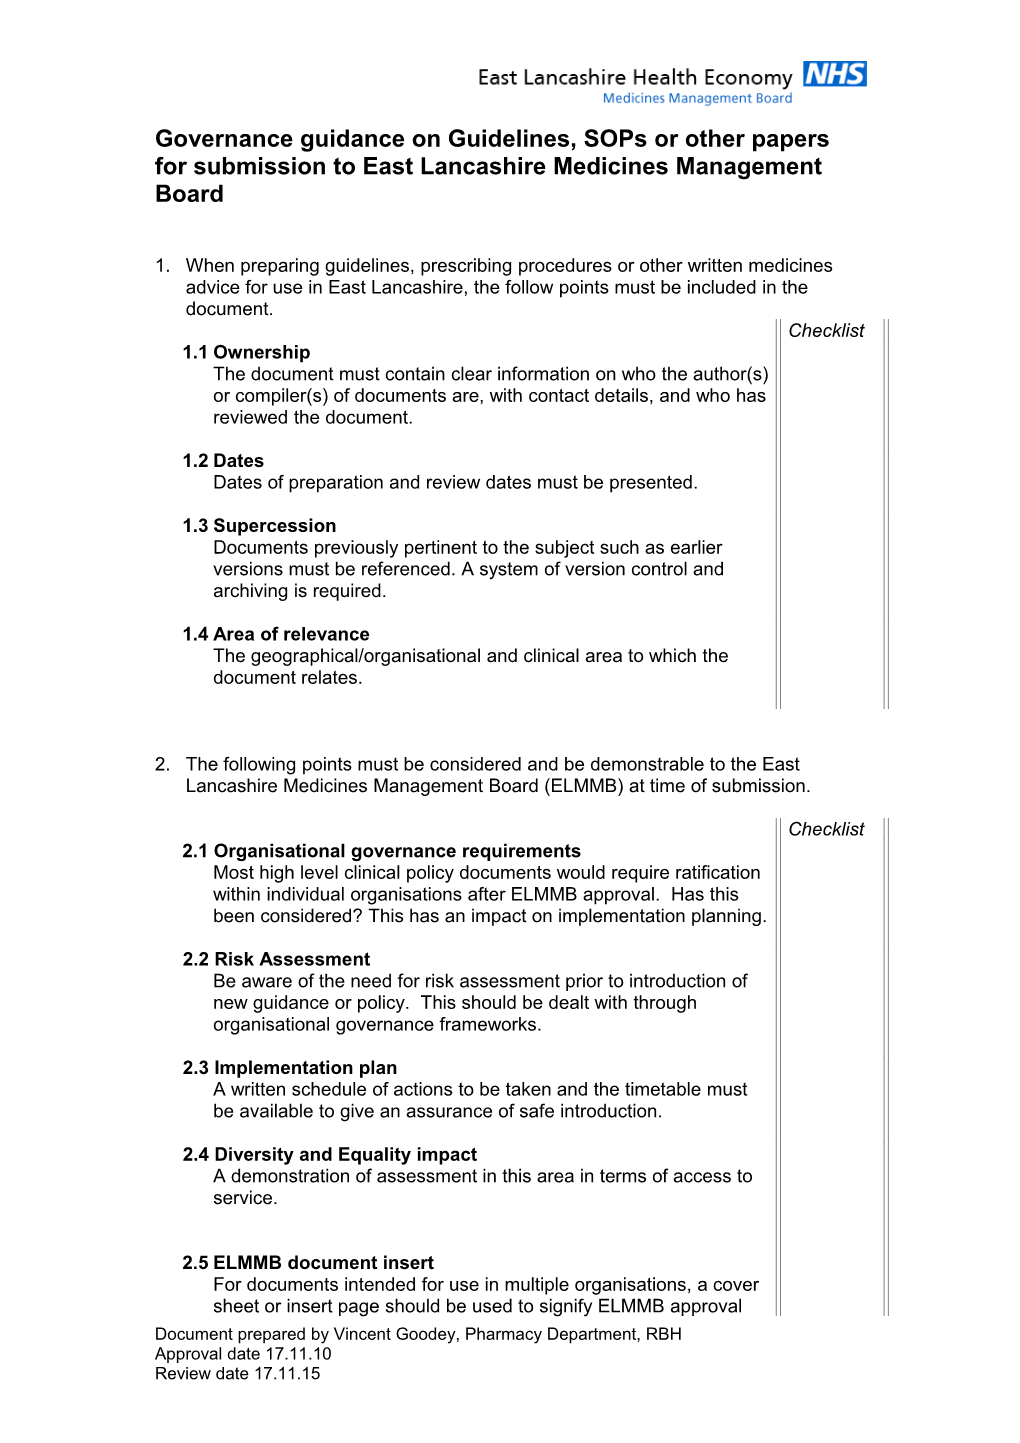 MMB Governance Checklist for Guidelines/Sops